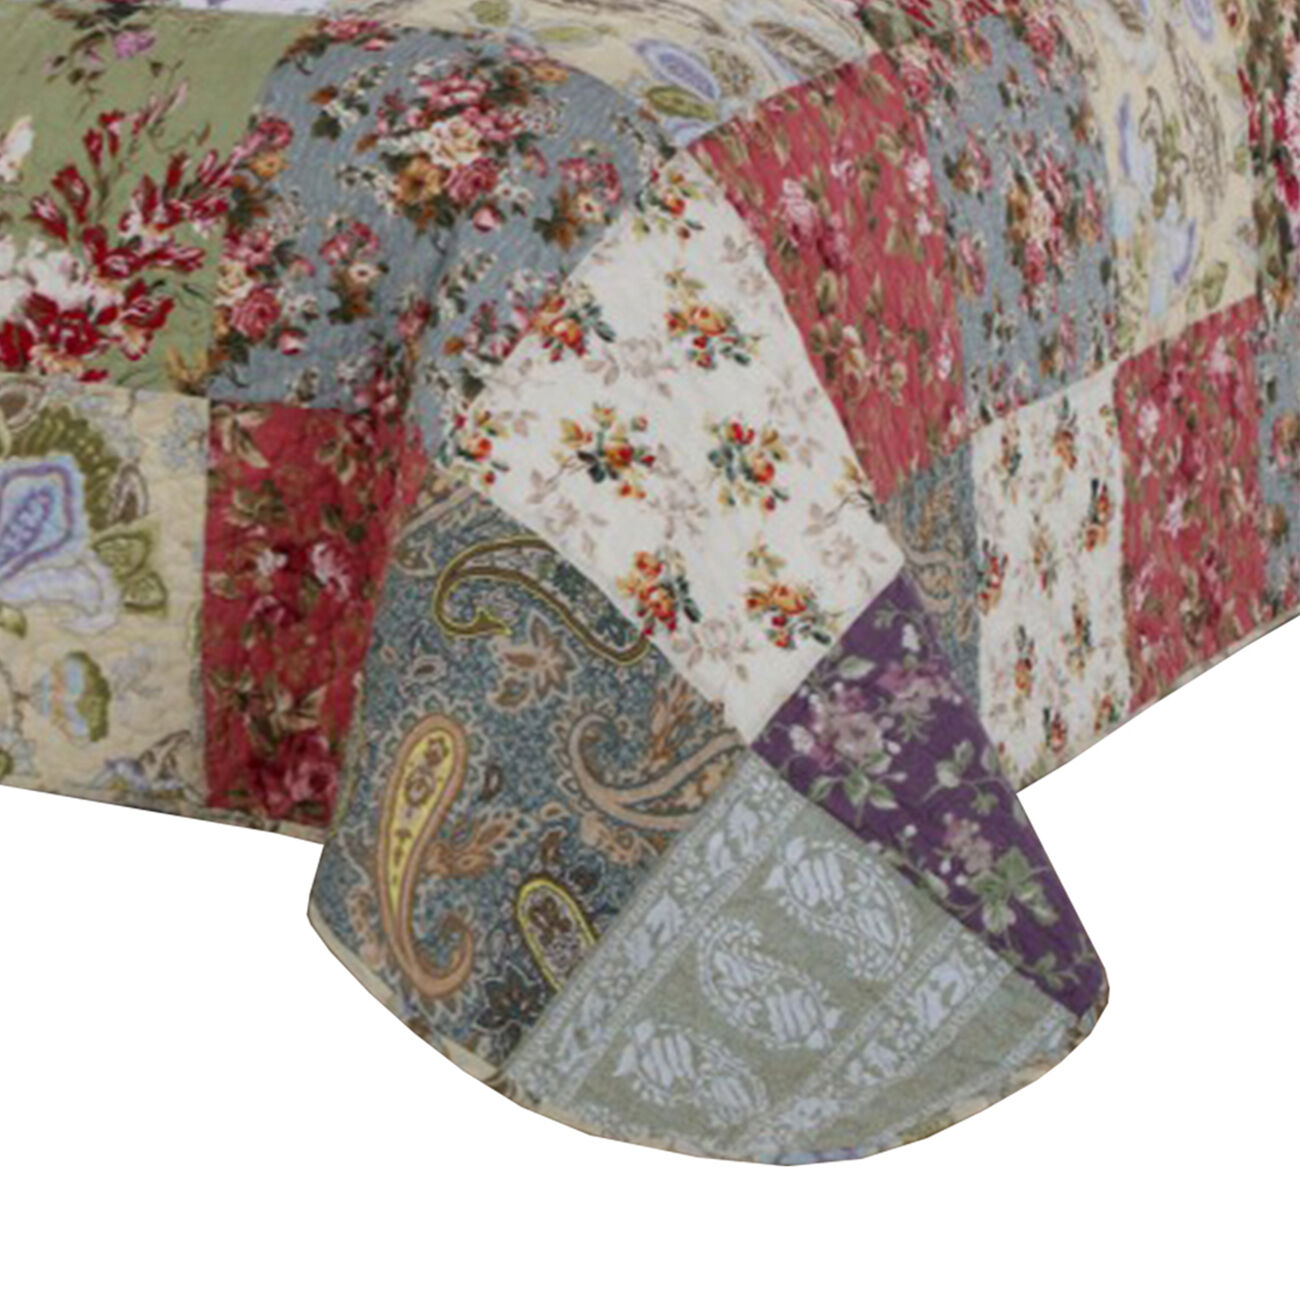 Eiger 3 Piece Fabric Queen Size Quilt Set with Jacobean Prints, Multicolor